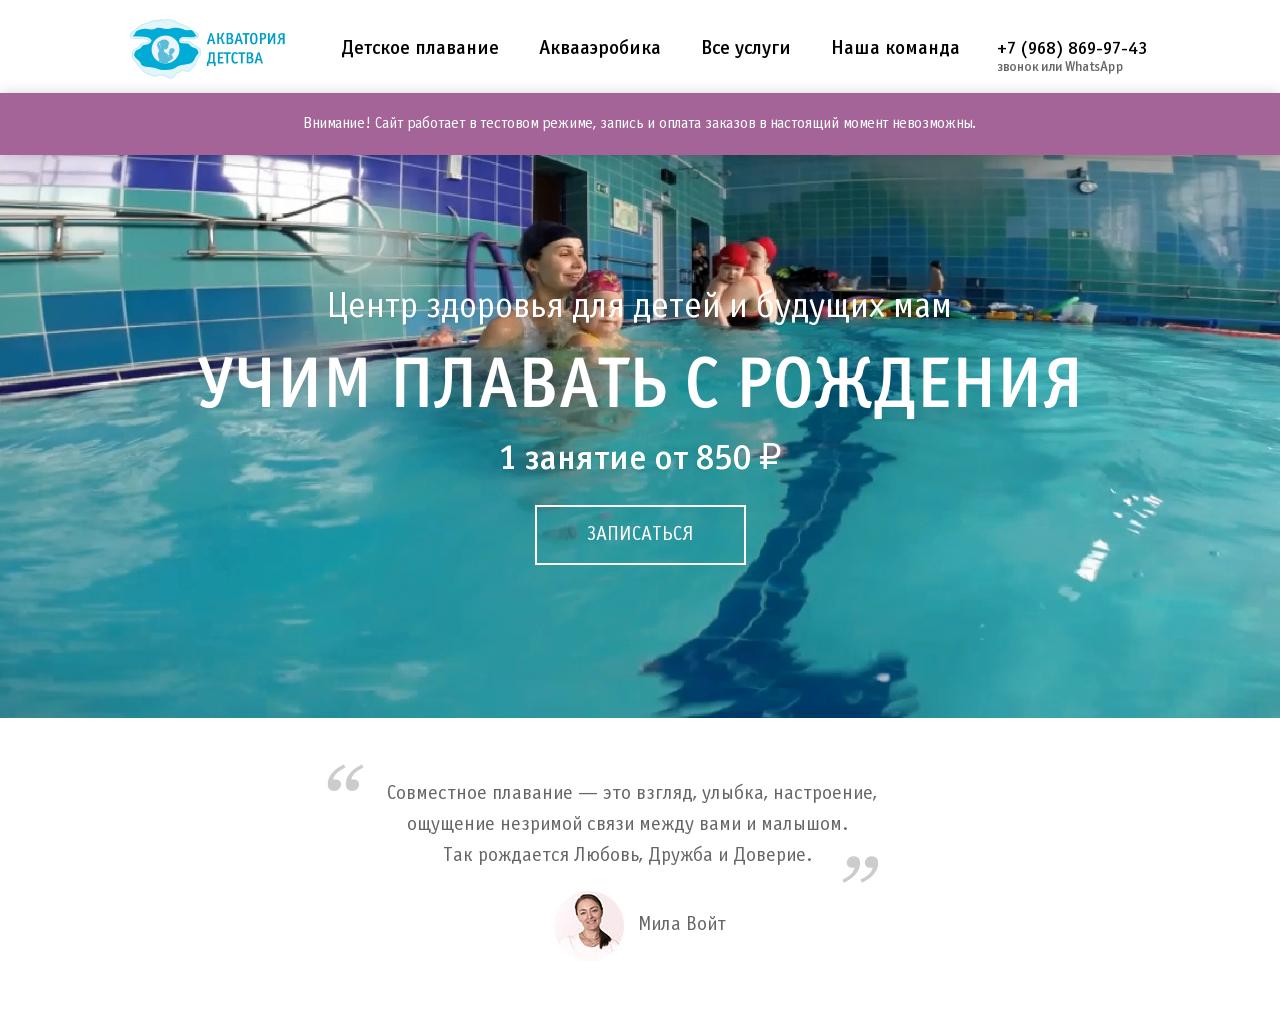 Изображение сайта aquatoriadetstva.ru в разрешении 1280x1024